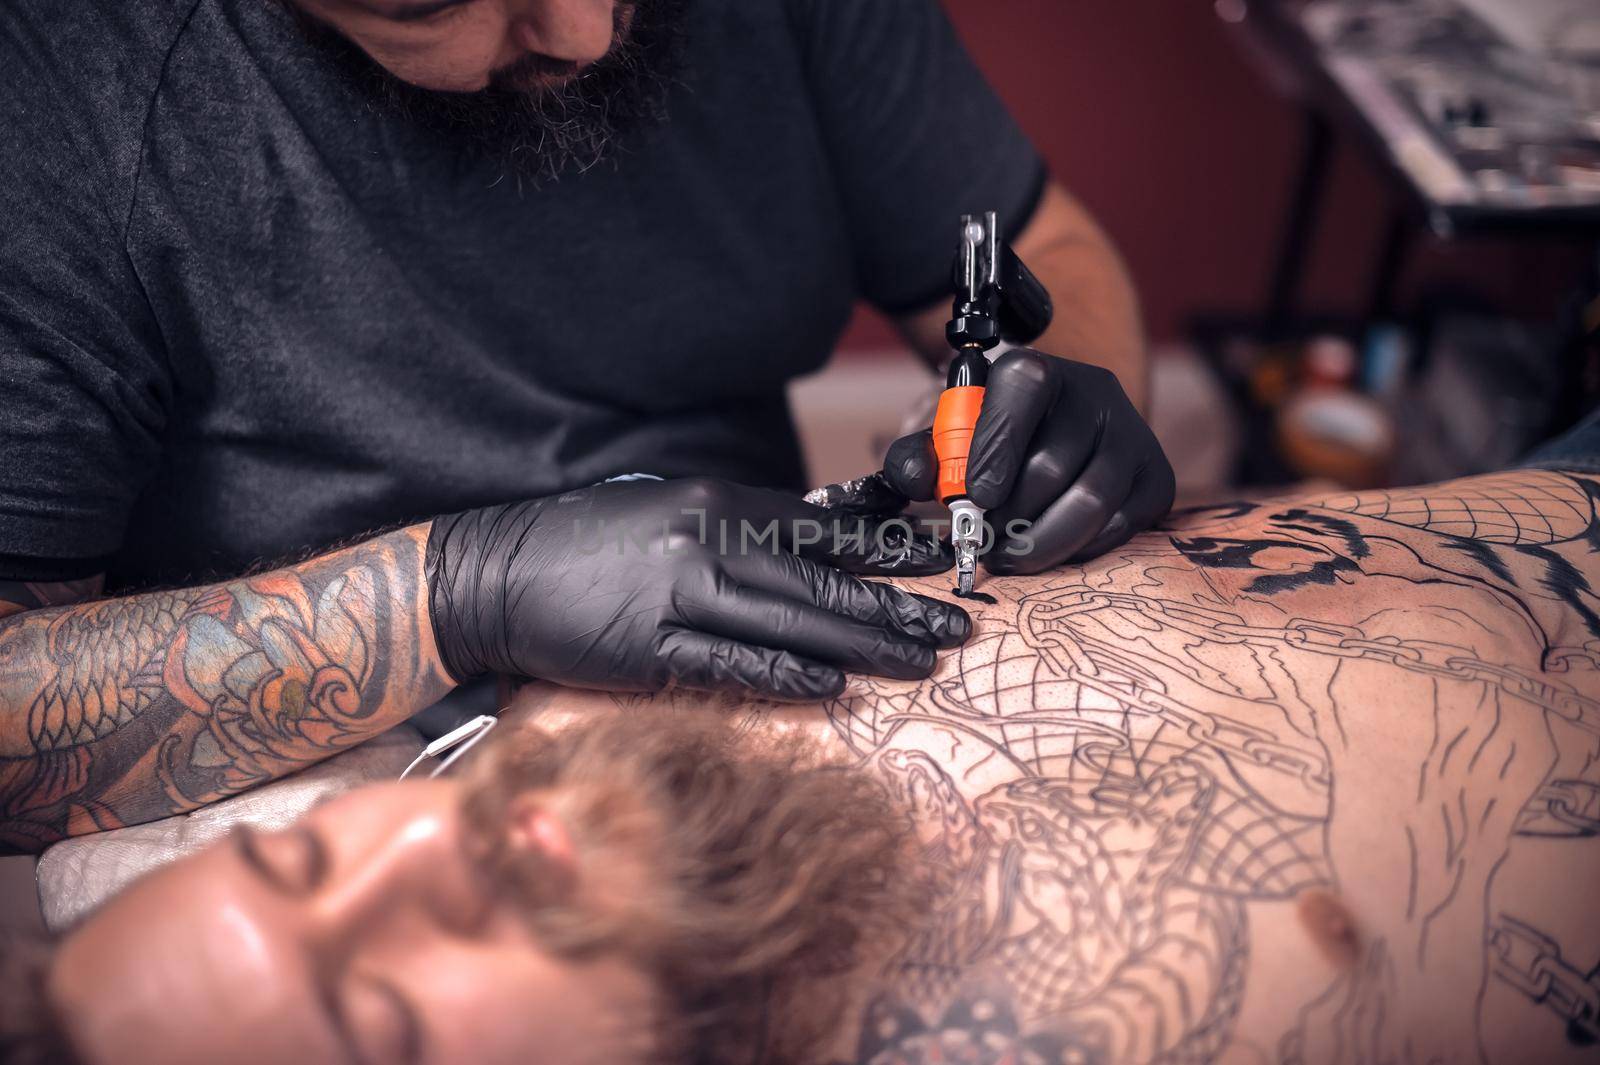 Tattooer working on professional tattoo machine device in tattoo studio by Proff